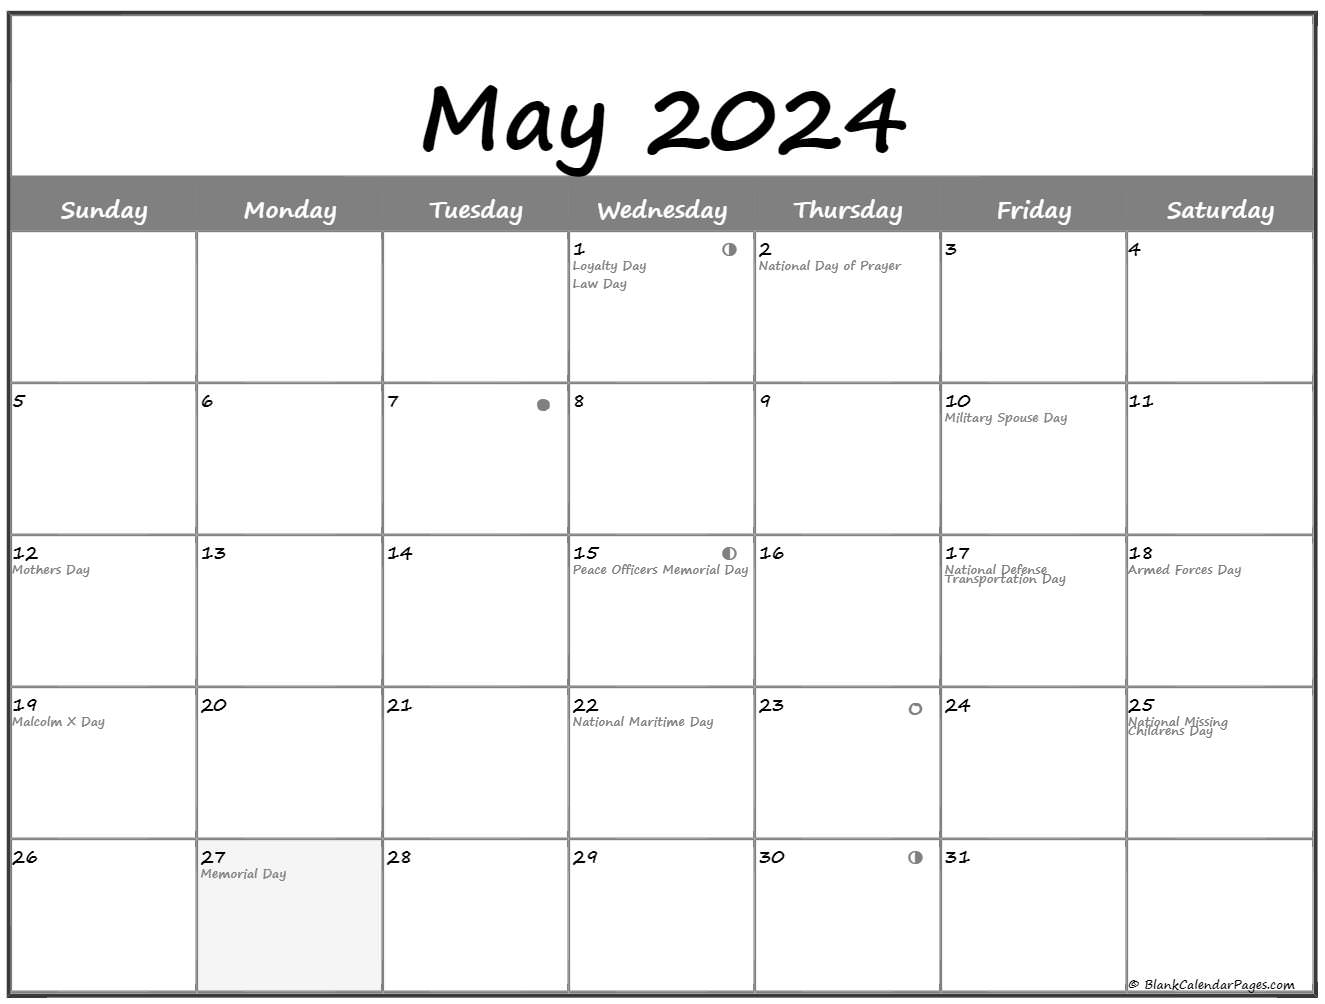 May 2023 Lunar Calendar Moon Phase Calendar